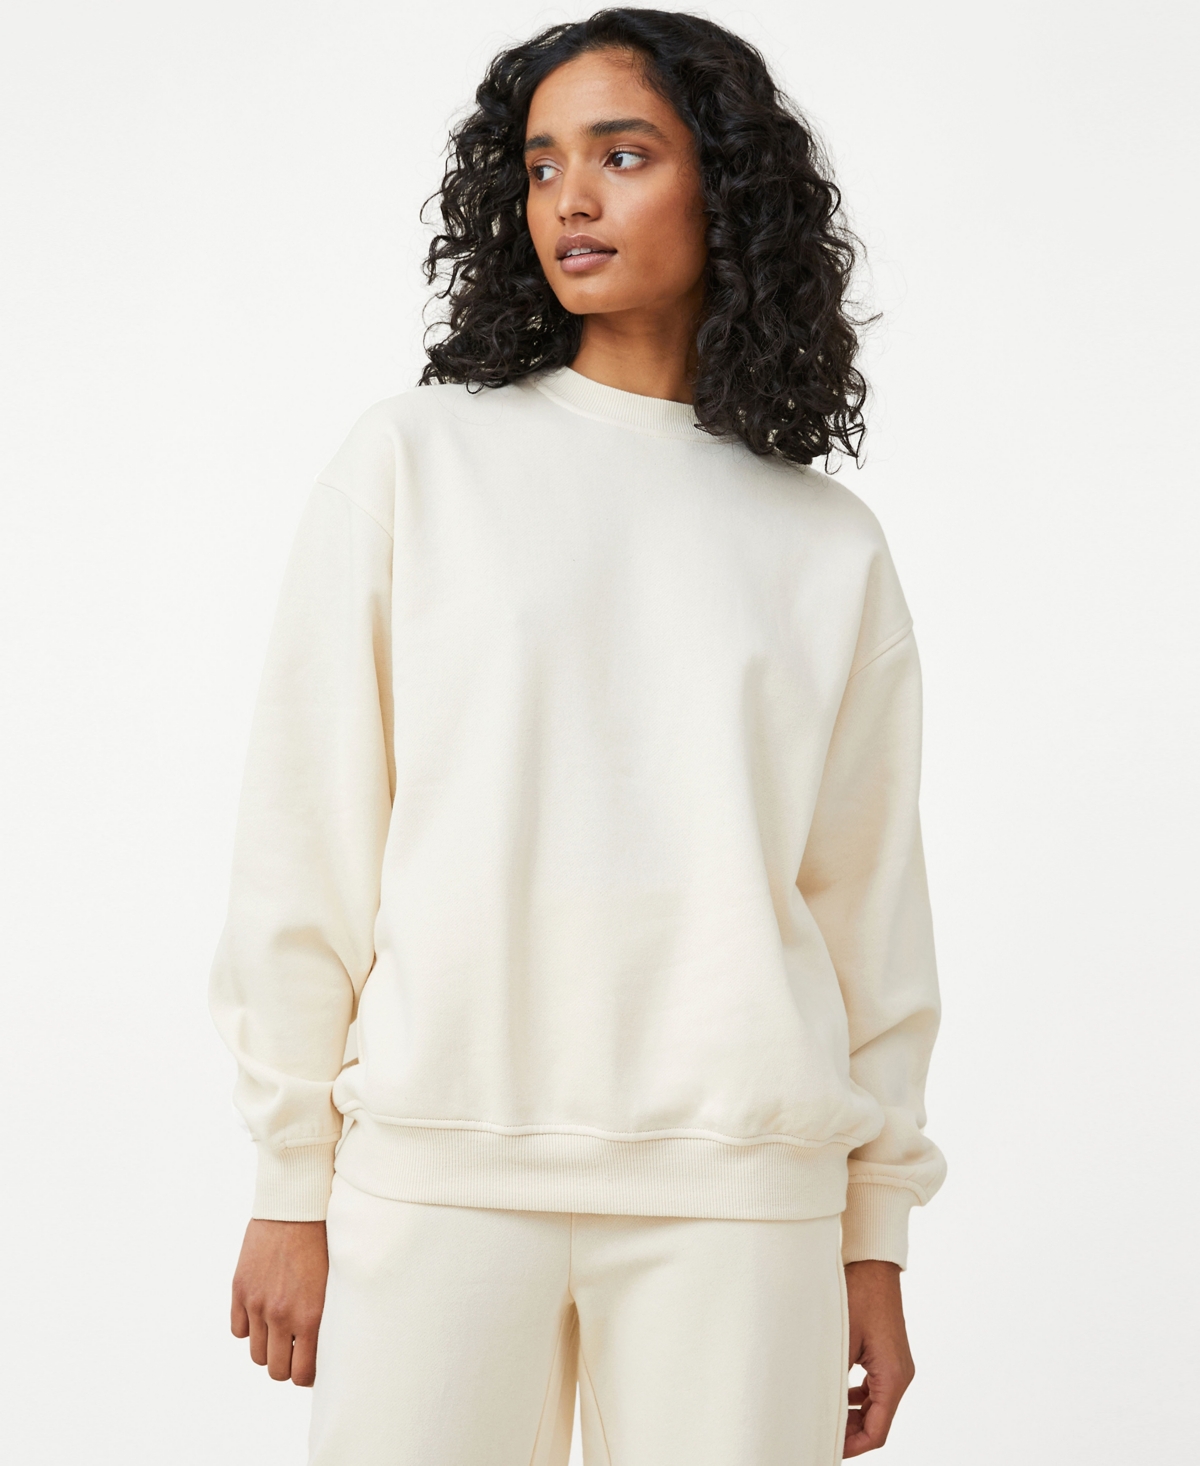 Cotton On Women's Classic Crew Sweatshirt